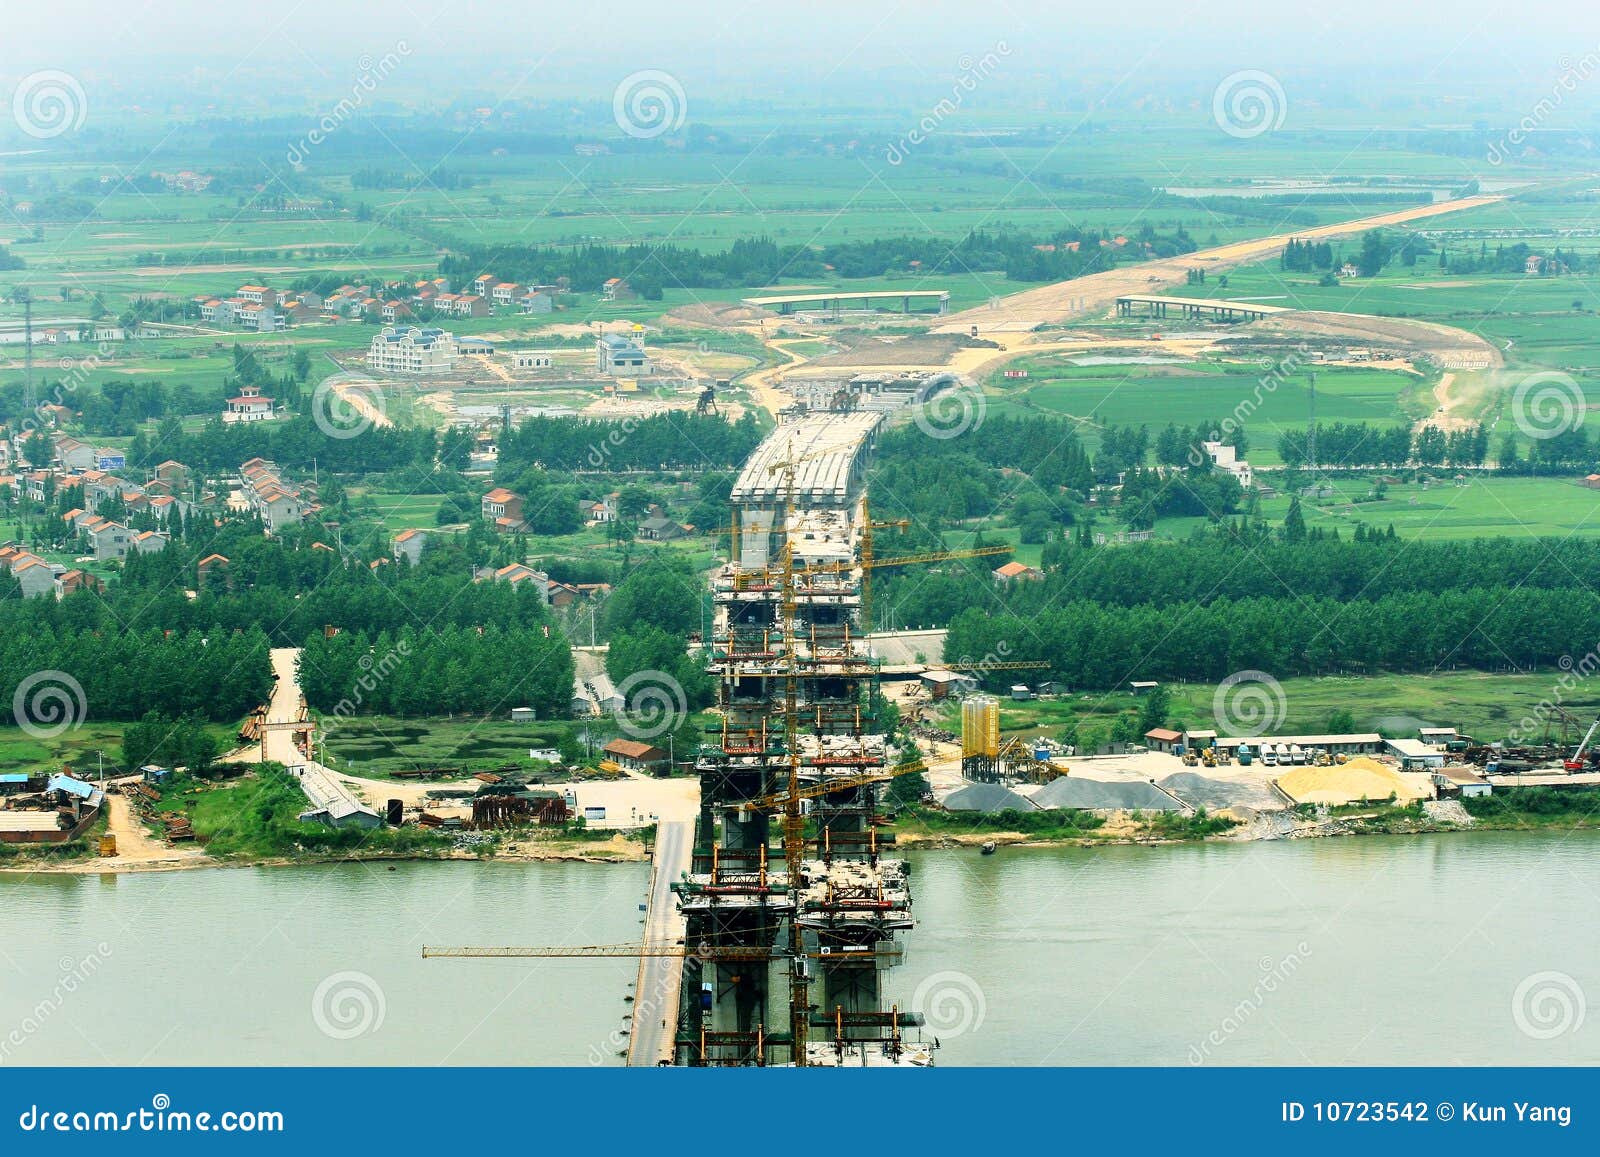 Is still under construction in the Yangtze River Bridge Jing Yue.